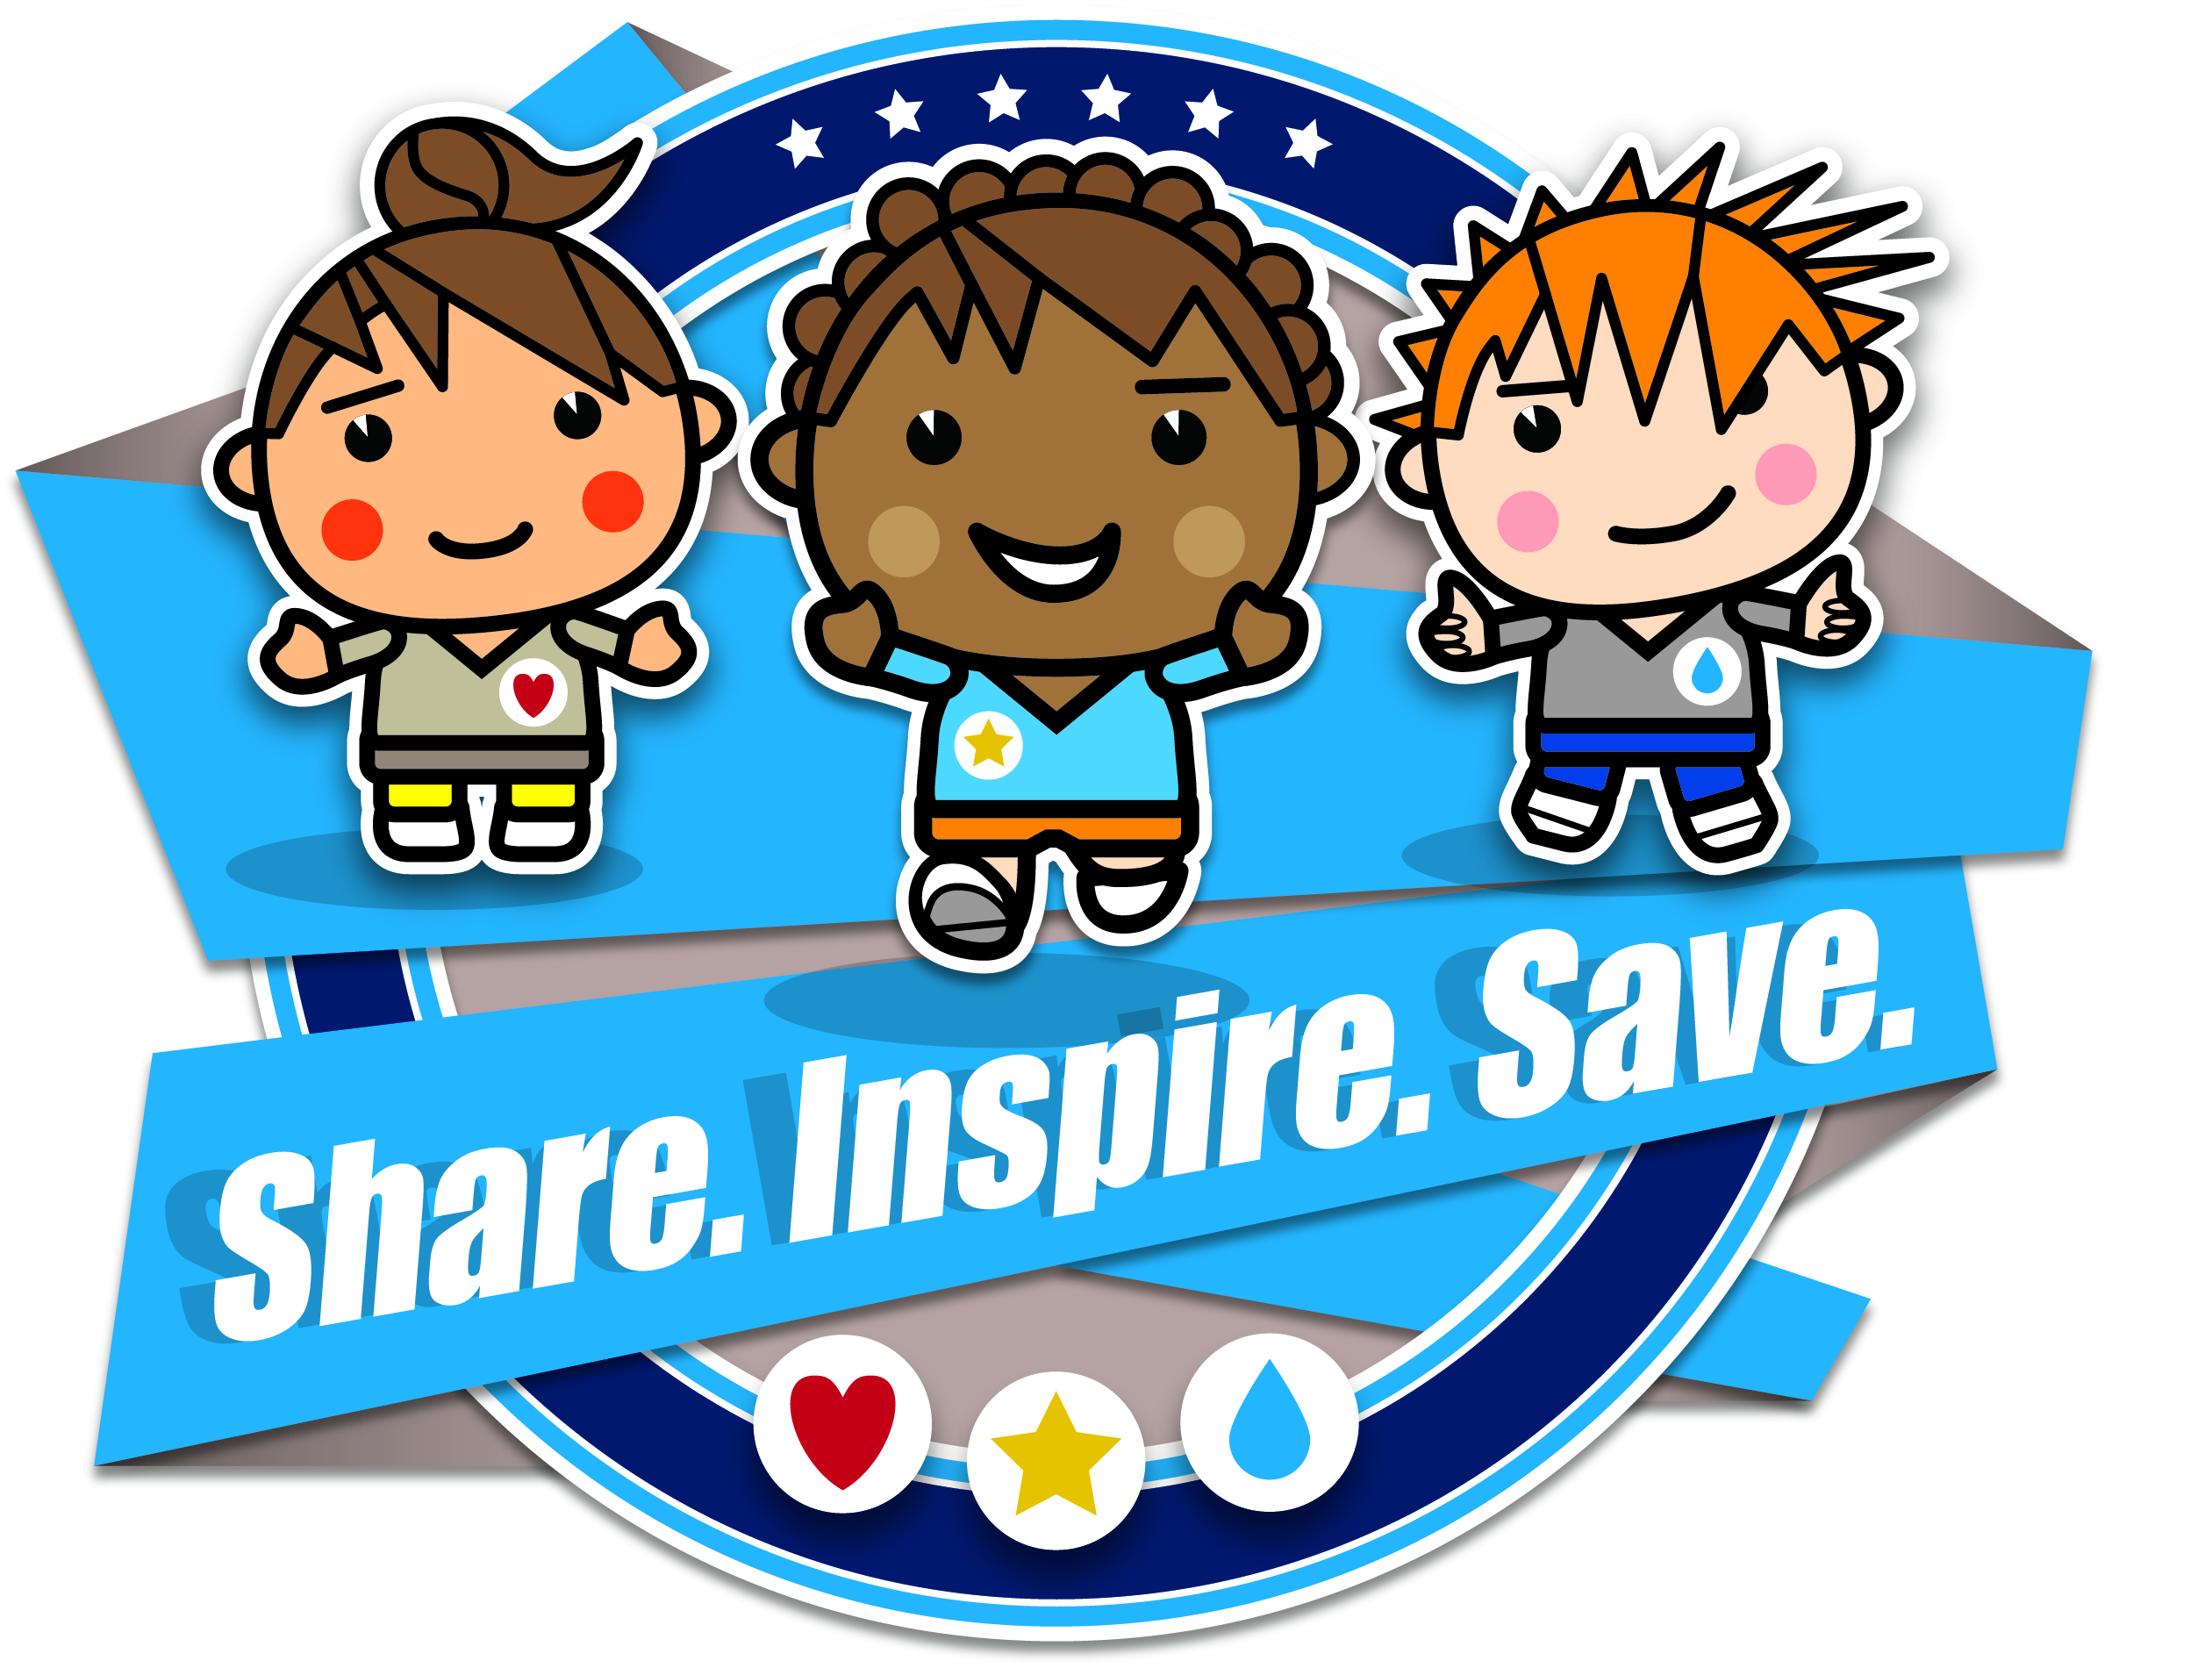 Share Inspire Save logo